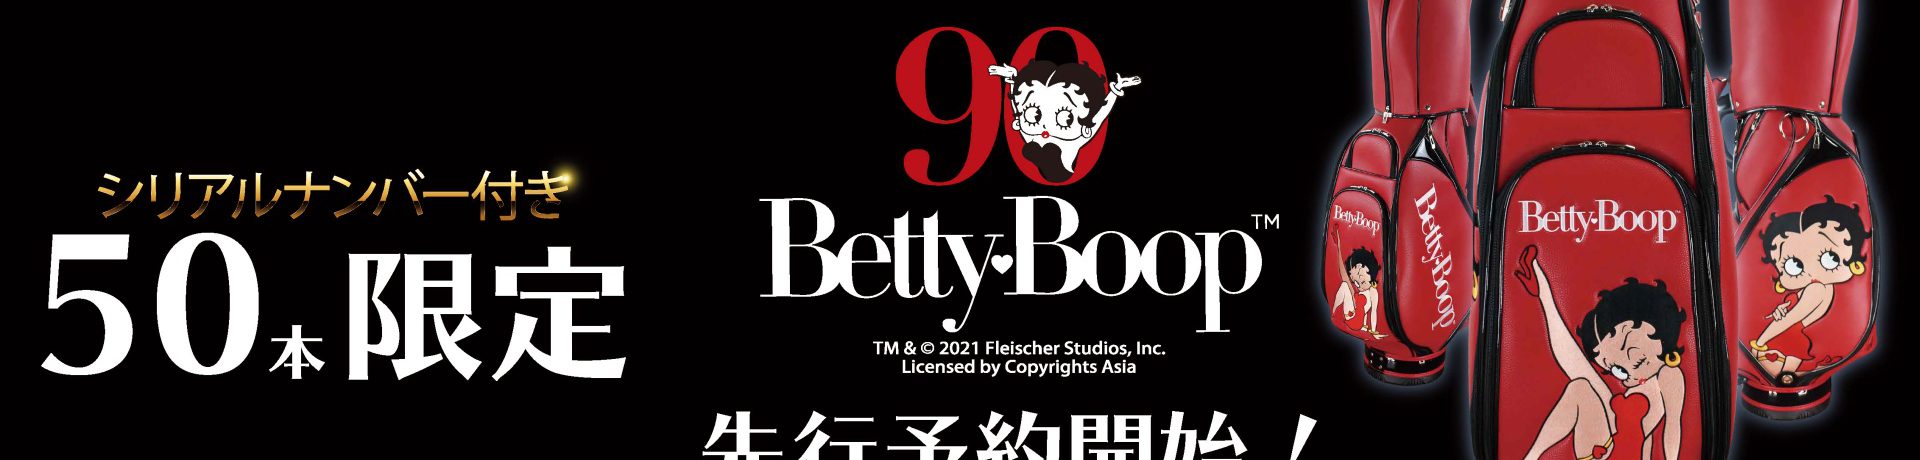 Betty Boop™ 50本限定生産 シリアルナンバープレートつき キャディバッグ